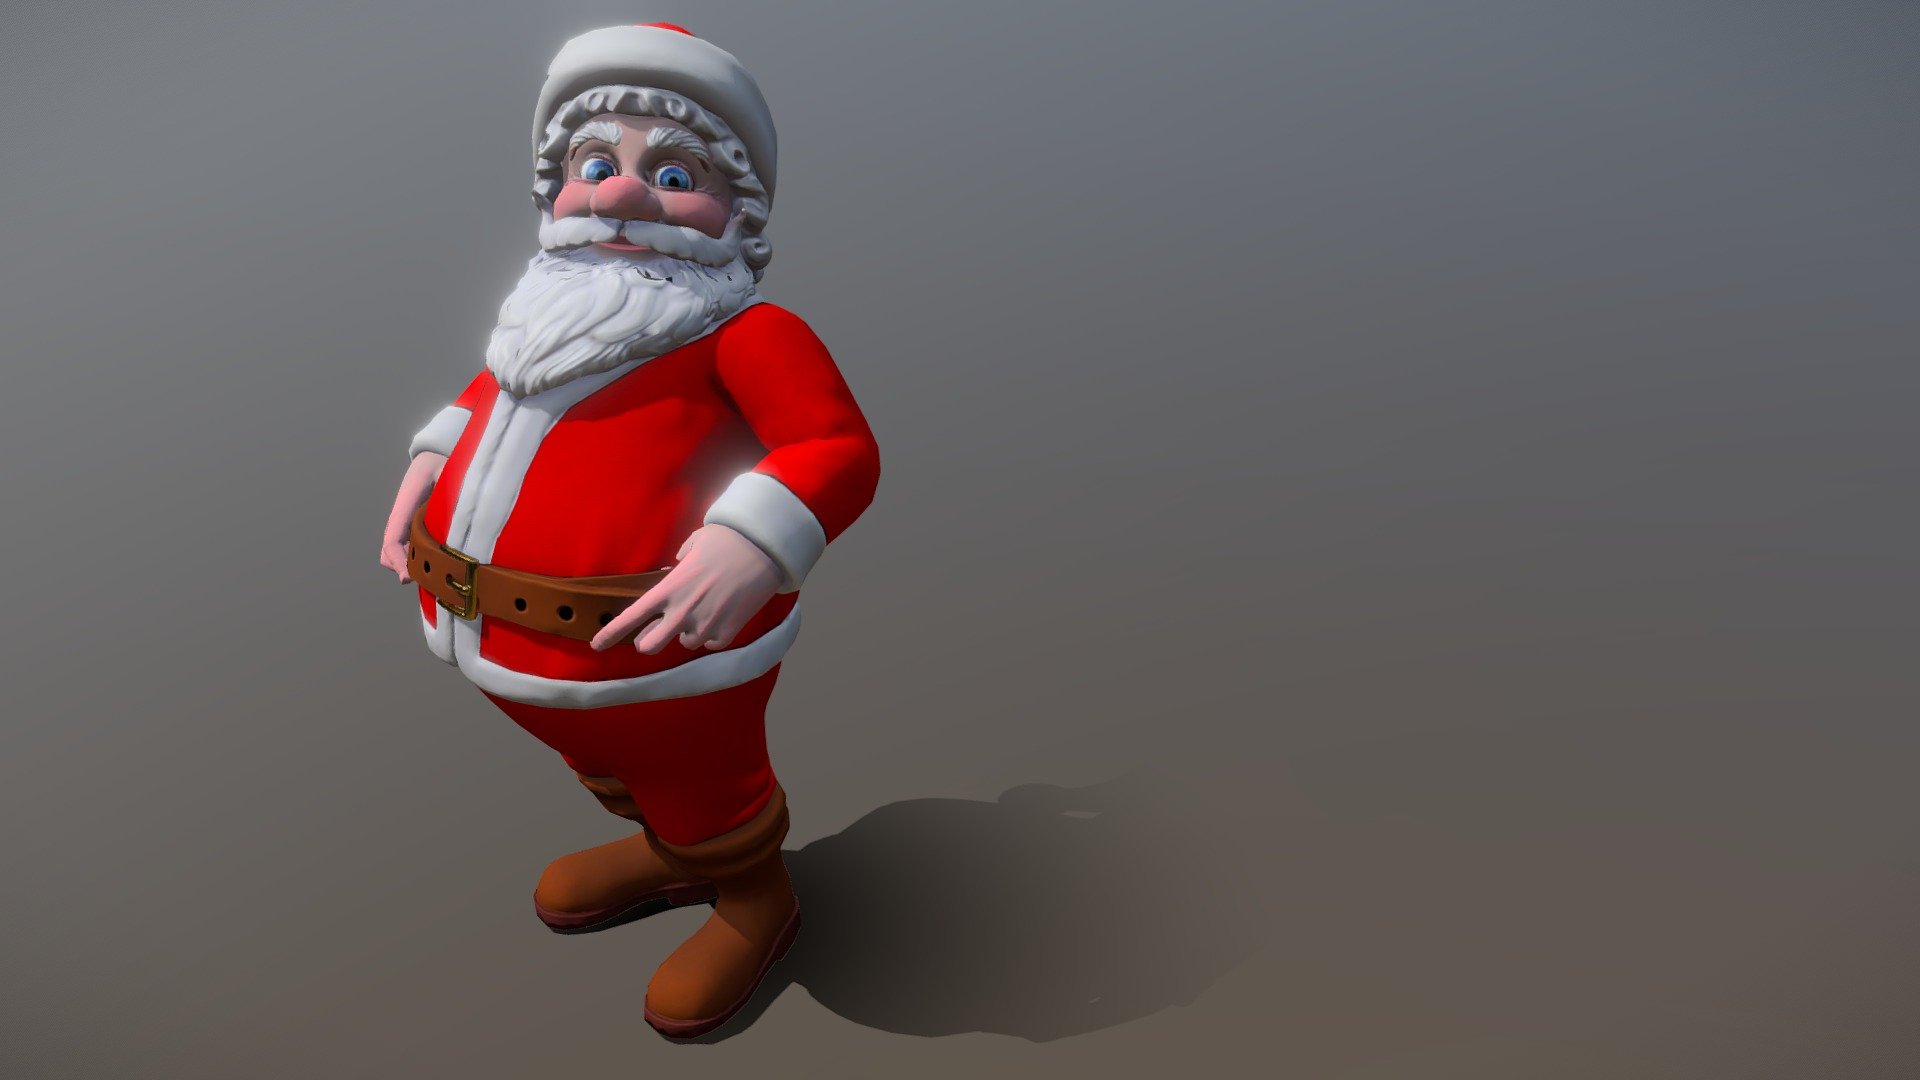 Papa Noël dans toute sa splendeur

buy the 3d printing figurine here
https://www.myminifactory.com/fr/object/3d-print-santa-s-gift-144620

support me on patreon
https://www.patreon.com/MithrilFactory - Pere Noel - Santa Claus is Back ! - 3D model by BlackantMaster 3d model